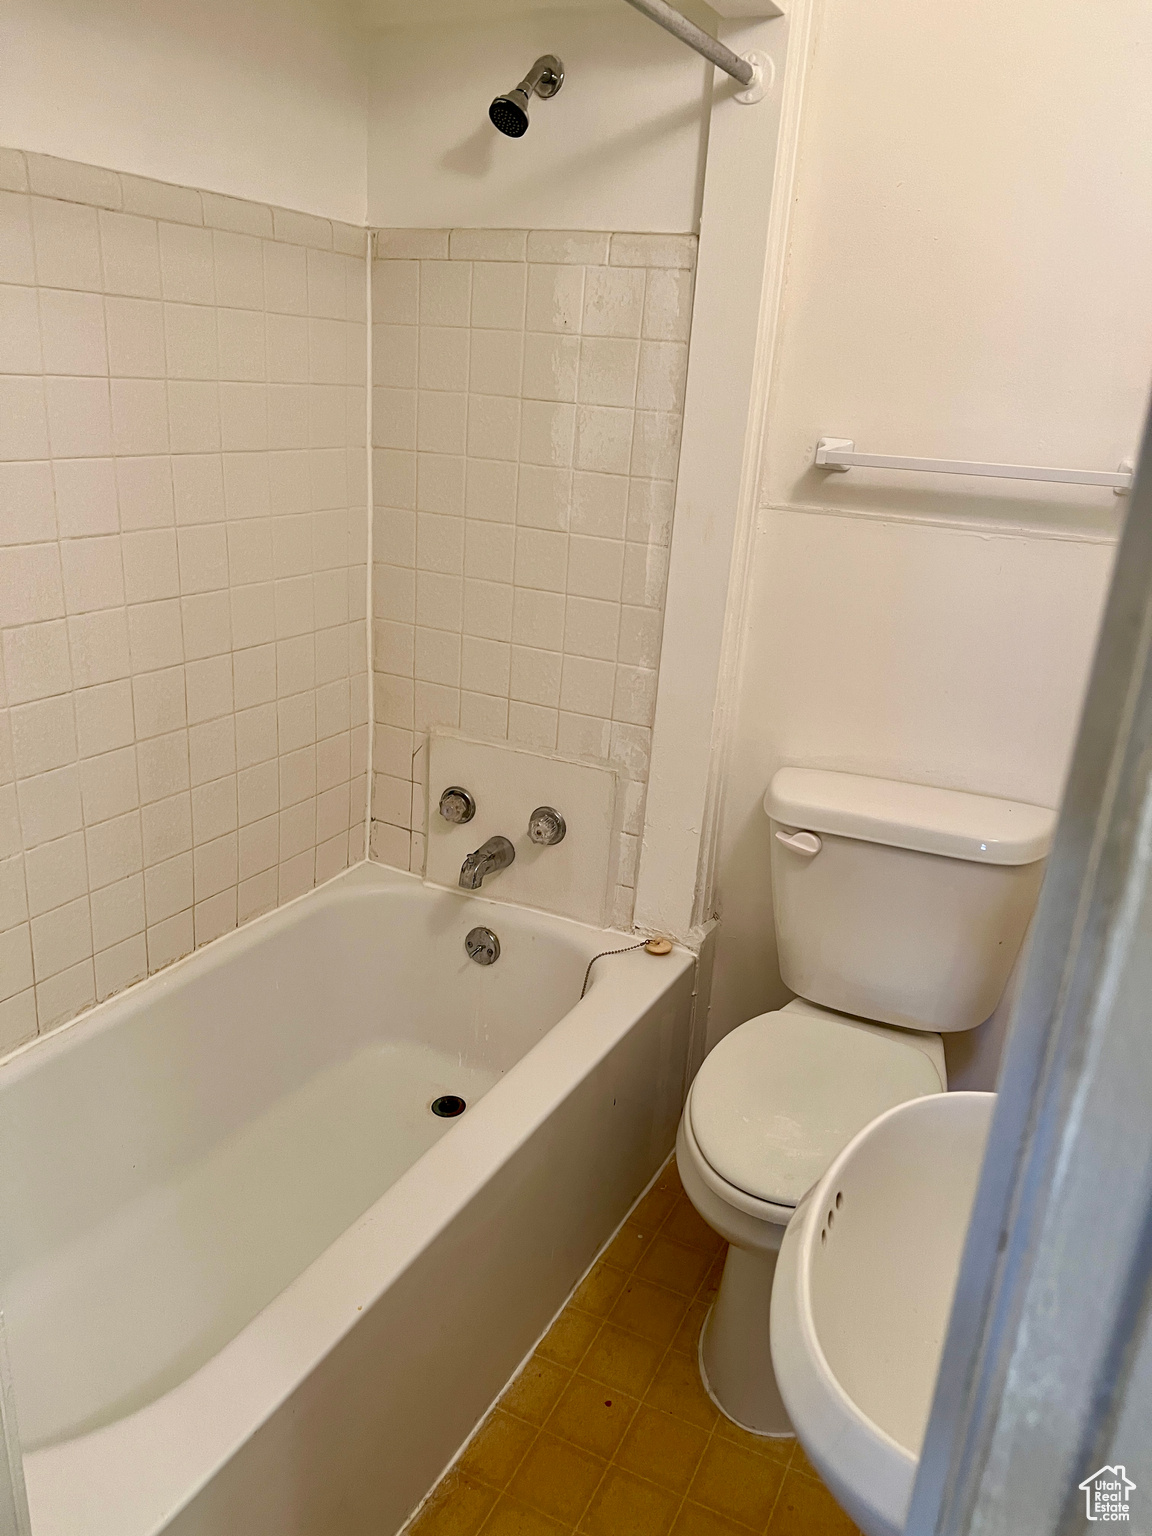 Bathroom with tile flooring, tiled shower / bath, and toilet